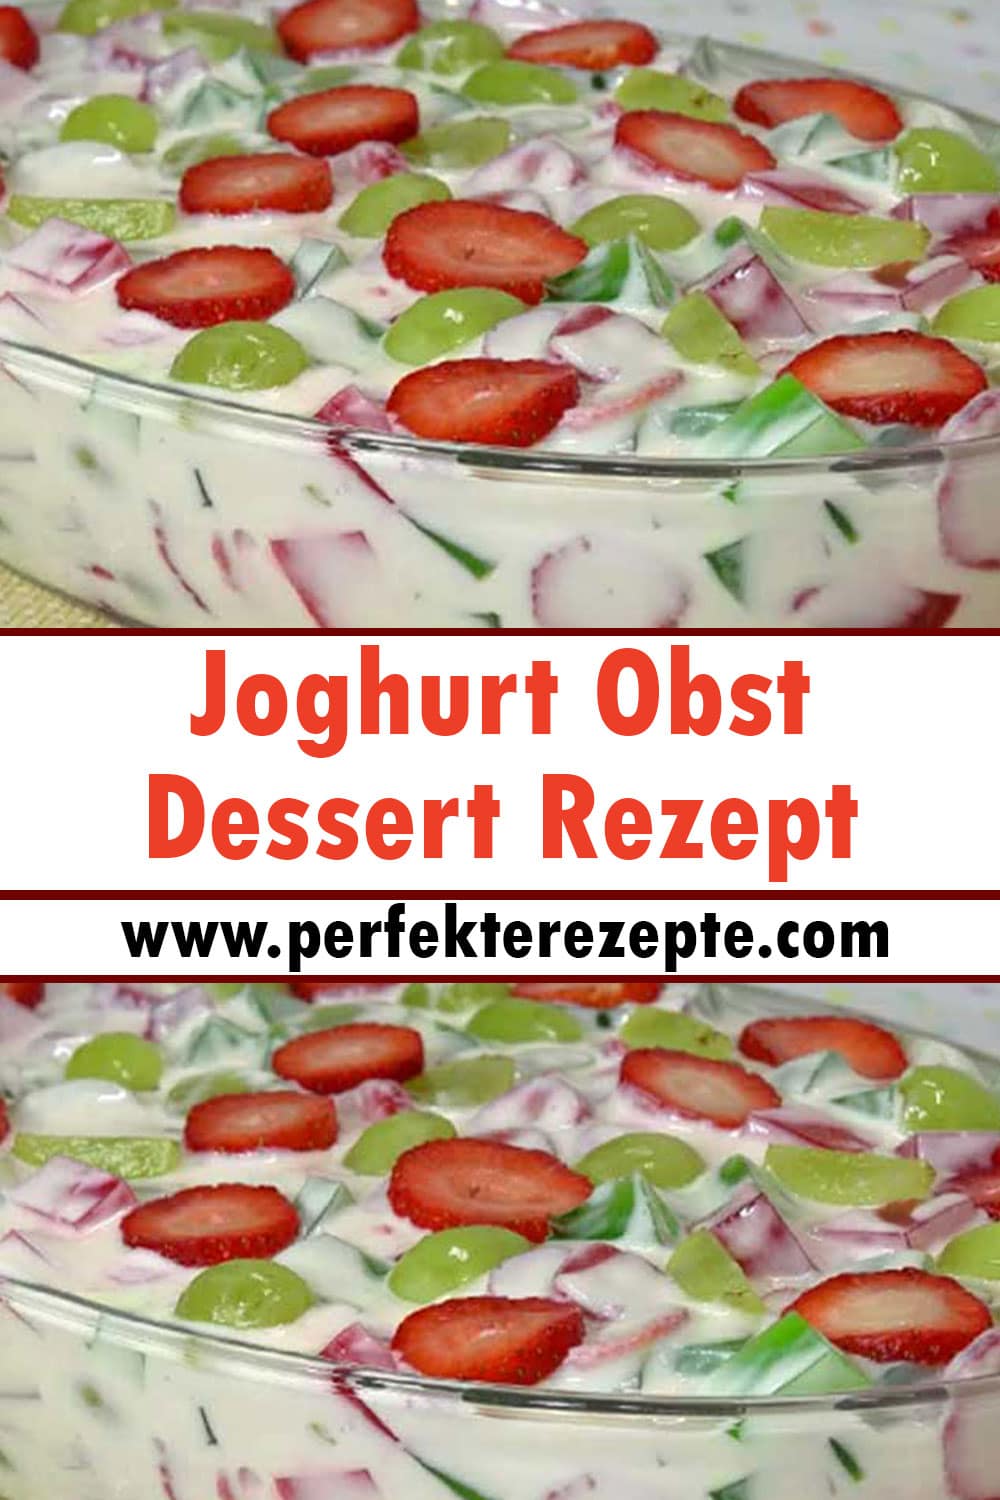 Joghurt Obst Dessert Rezept